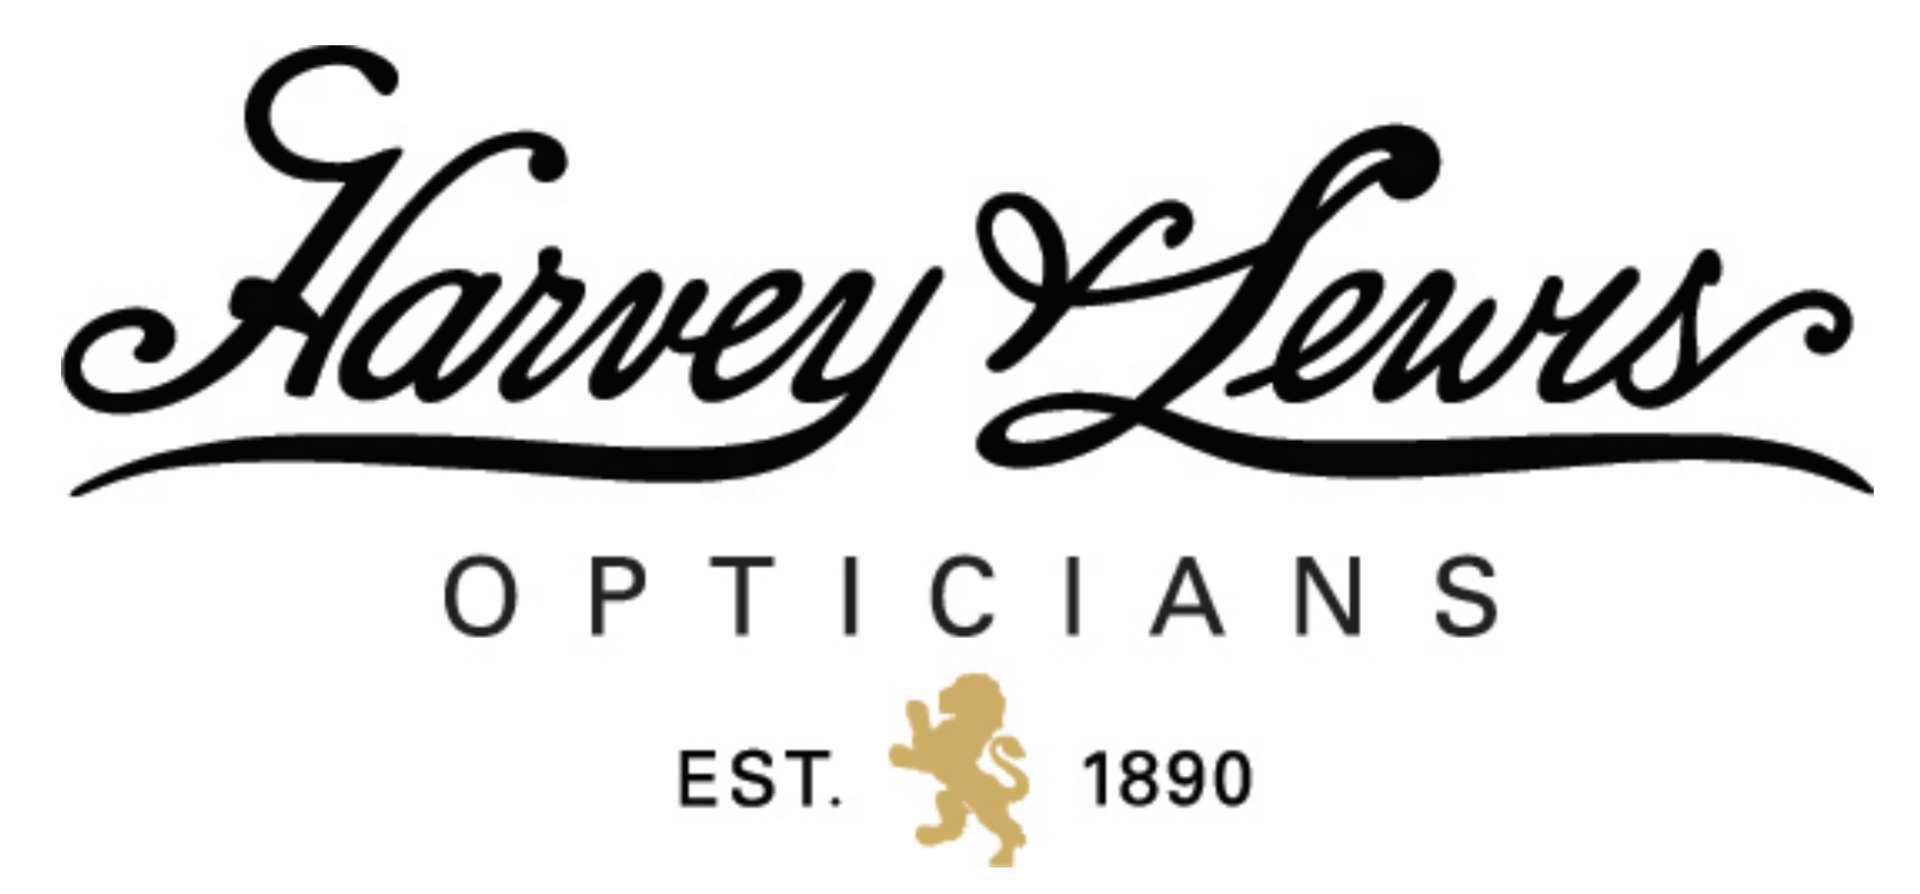 Harvey & Lewis Opticians